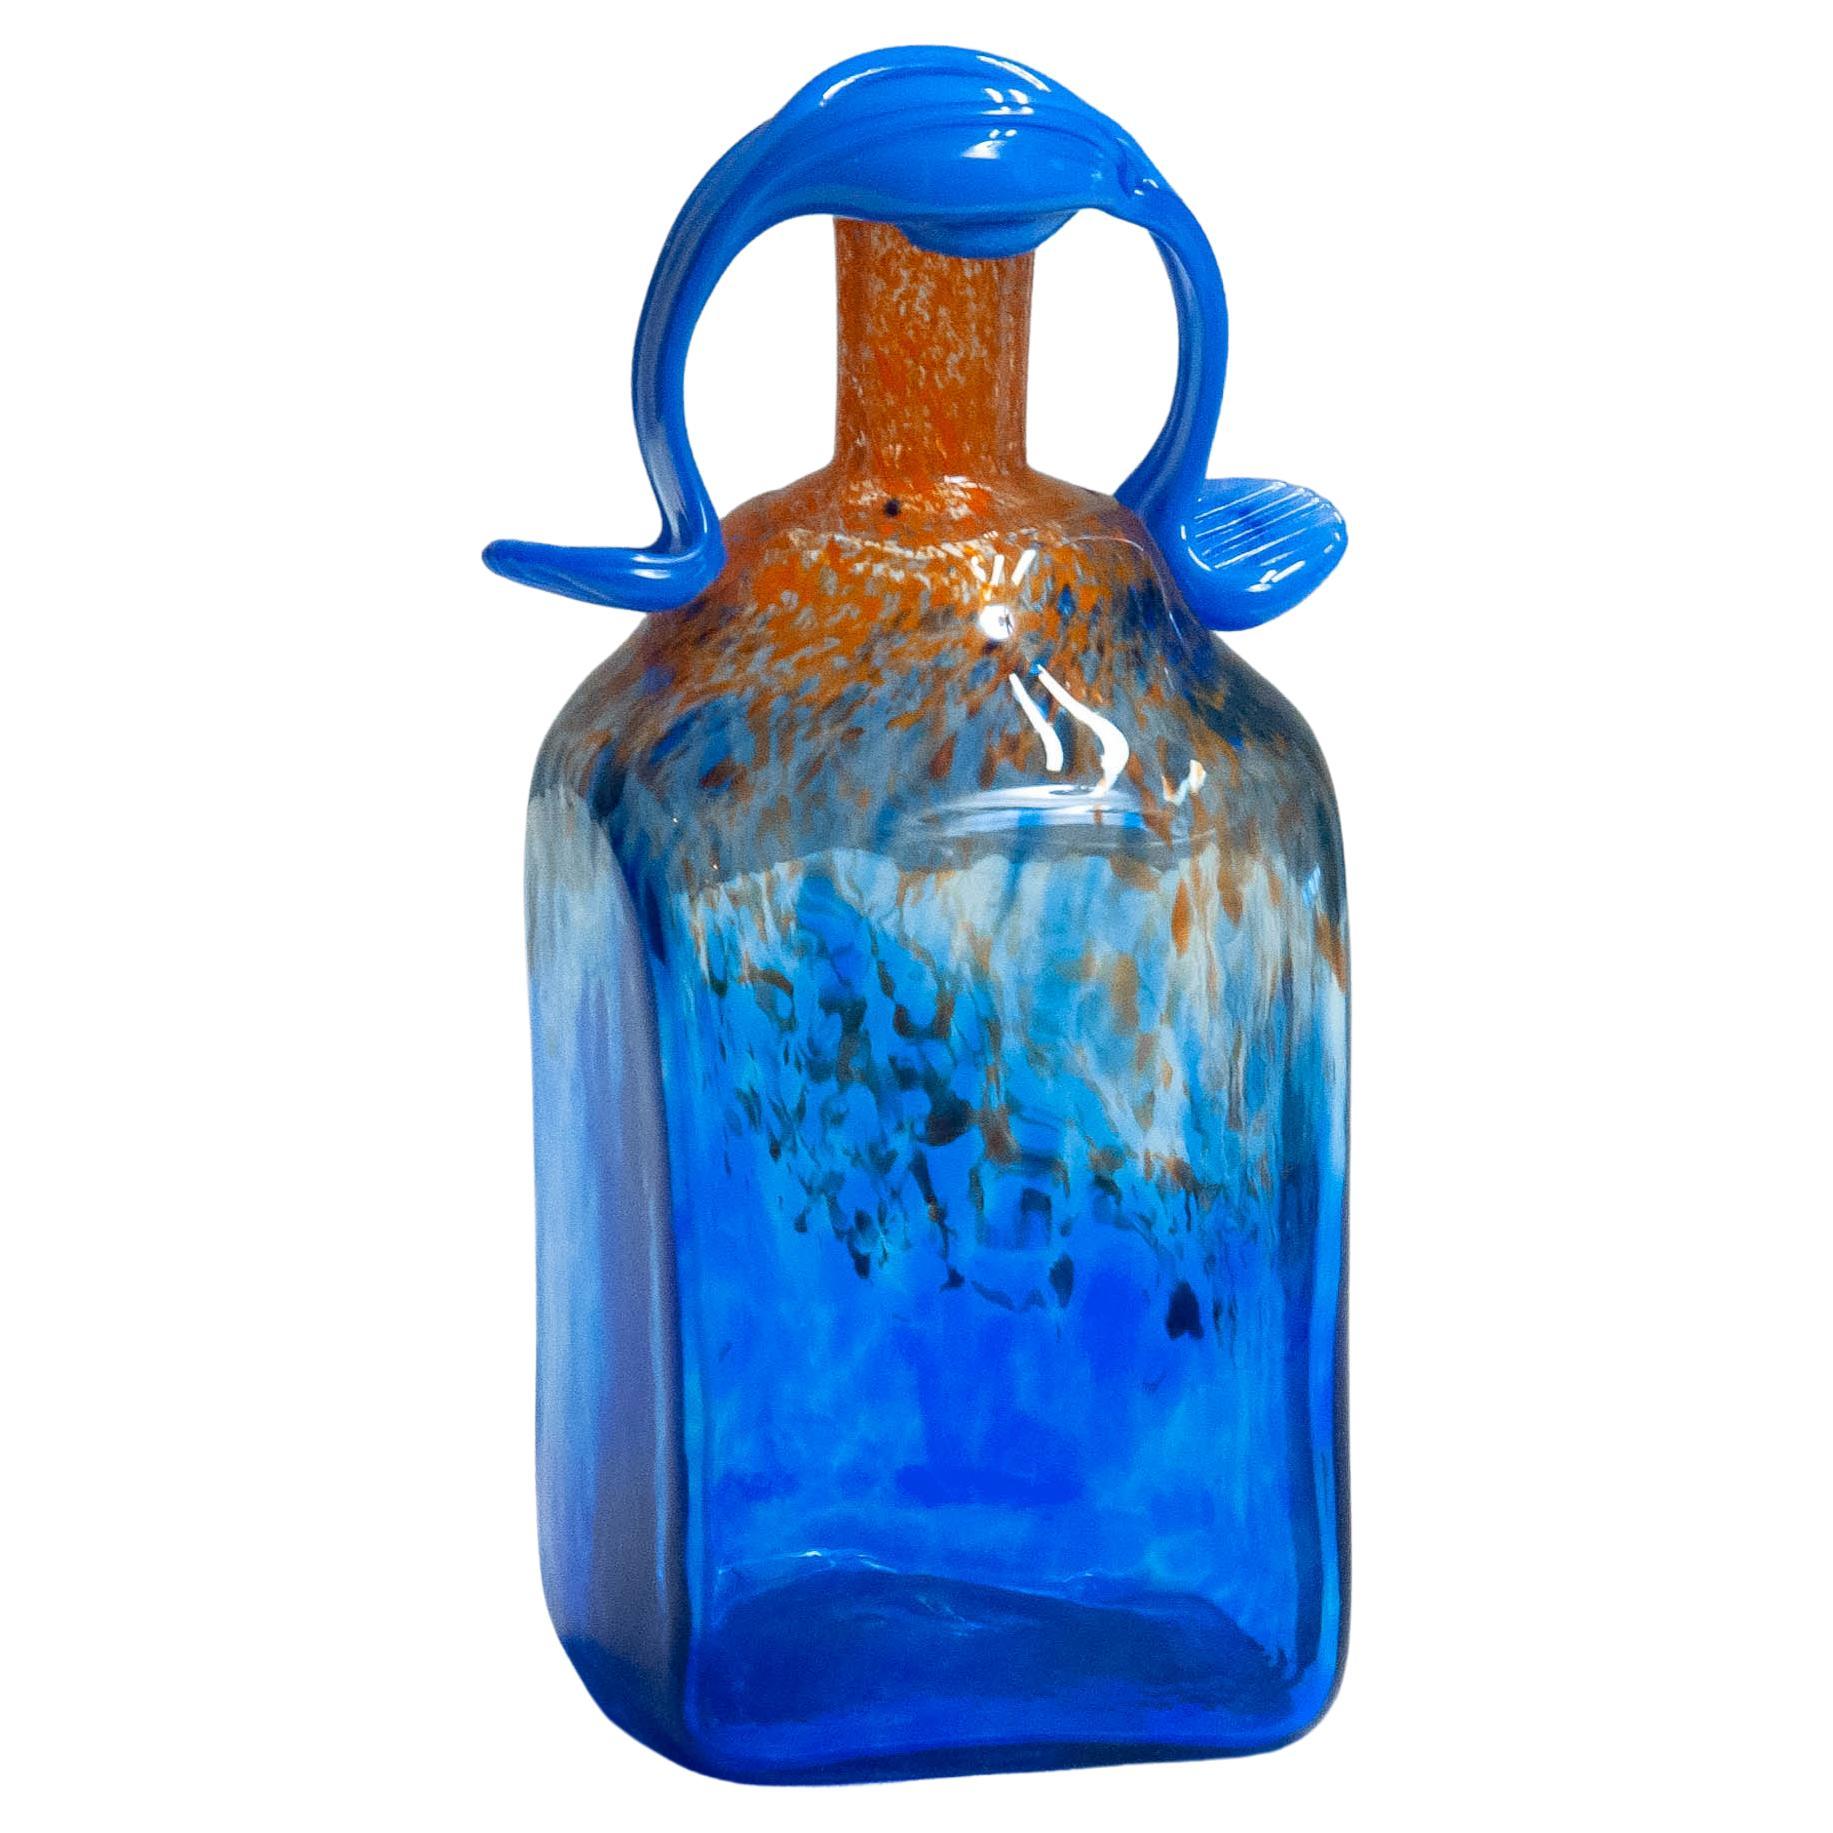 1980s Blue Art Glass Bottle Handmade by Staffan Gellerstedt at Studio Glashyttan For Sale